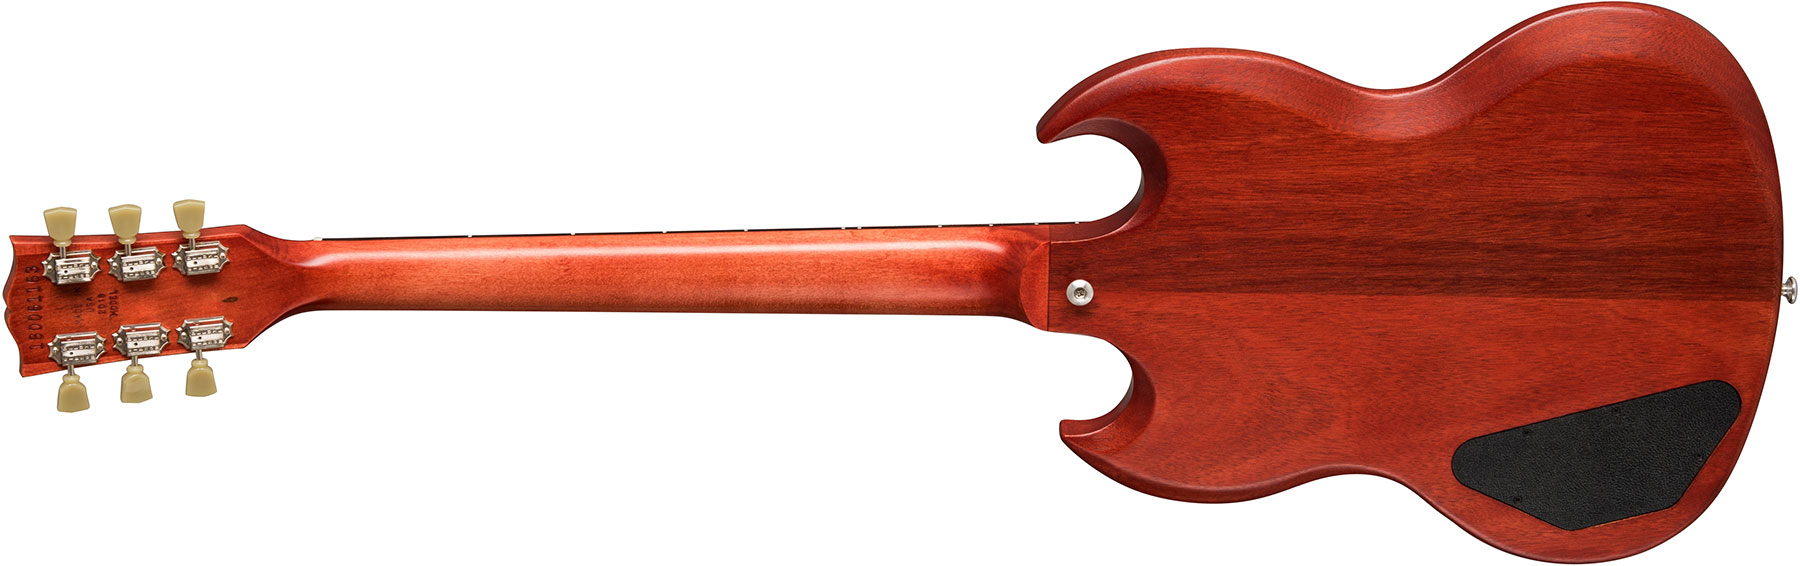 Gibson Sg Standard Tribute - Vintage Cherry Satin - Double Cut E-Gitarre - Variation 2